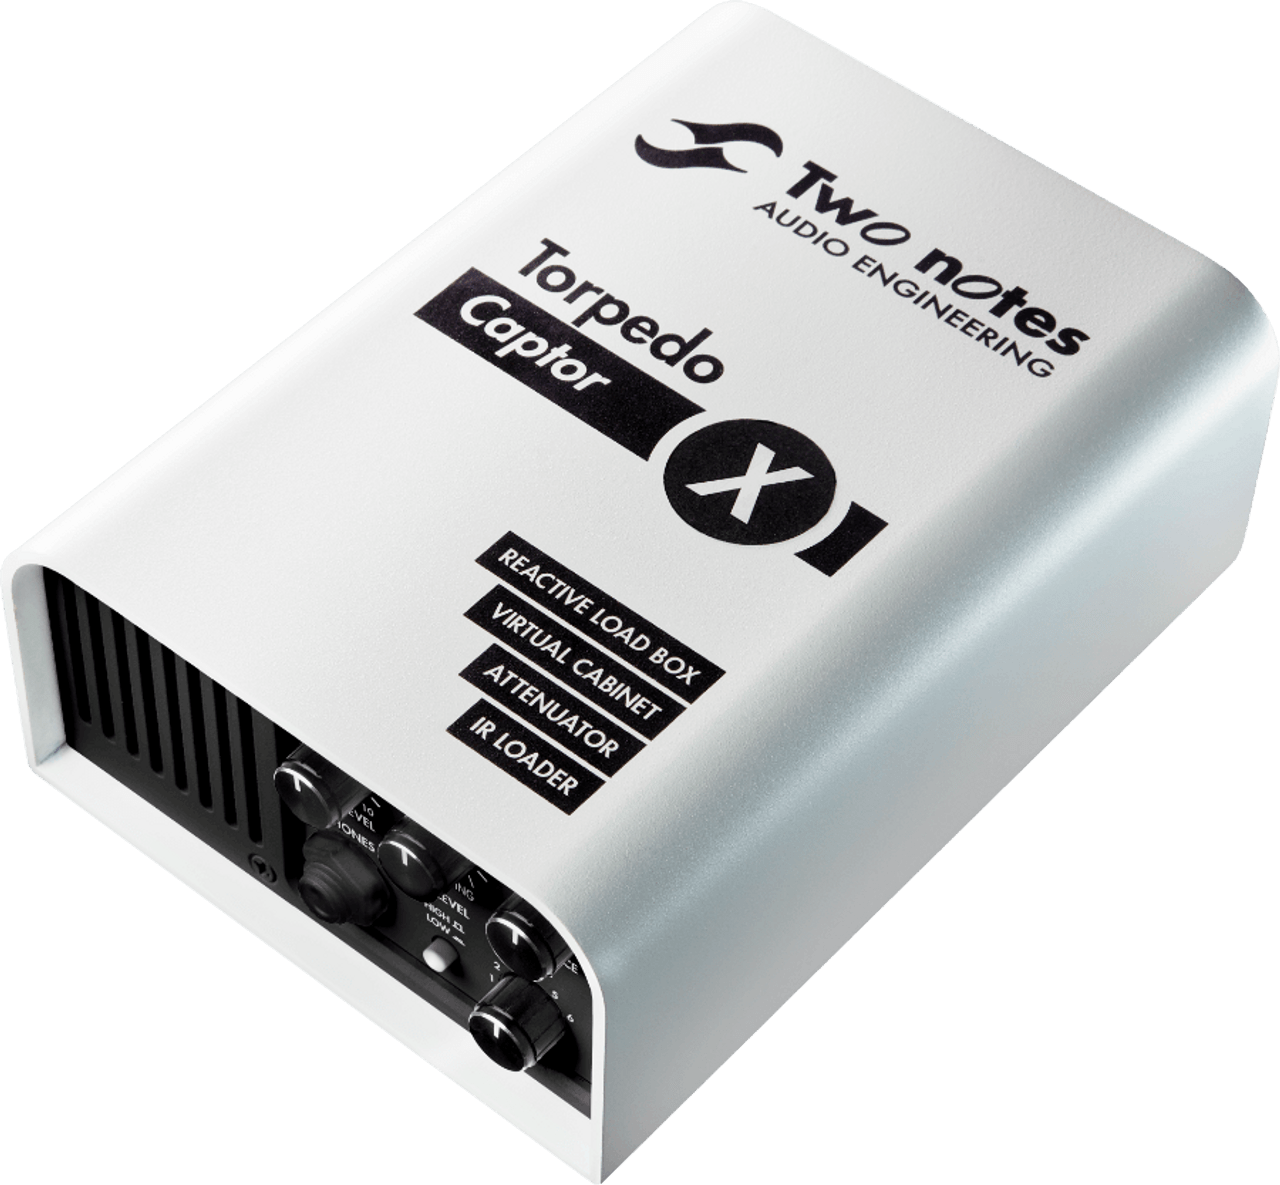 Two-Notes Torpedo Captor X 16-Ohm Digital Loadbox, Attenuator, and Speaker Simulator